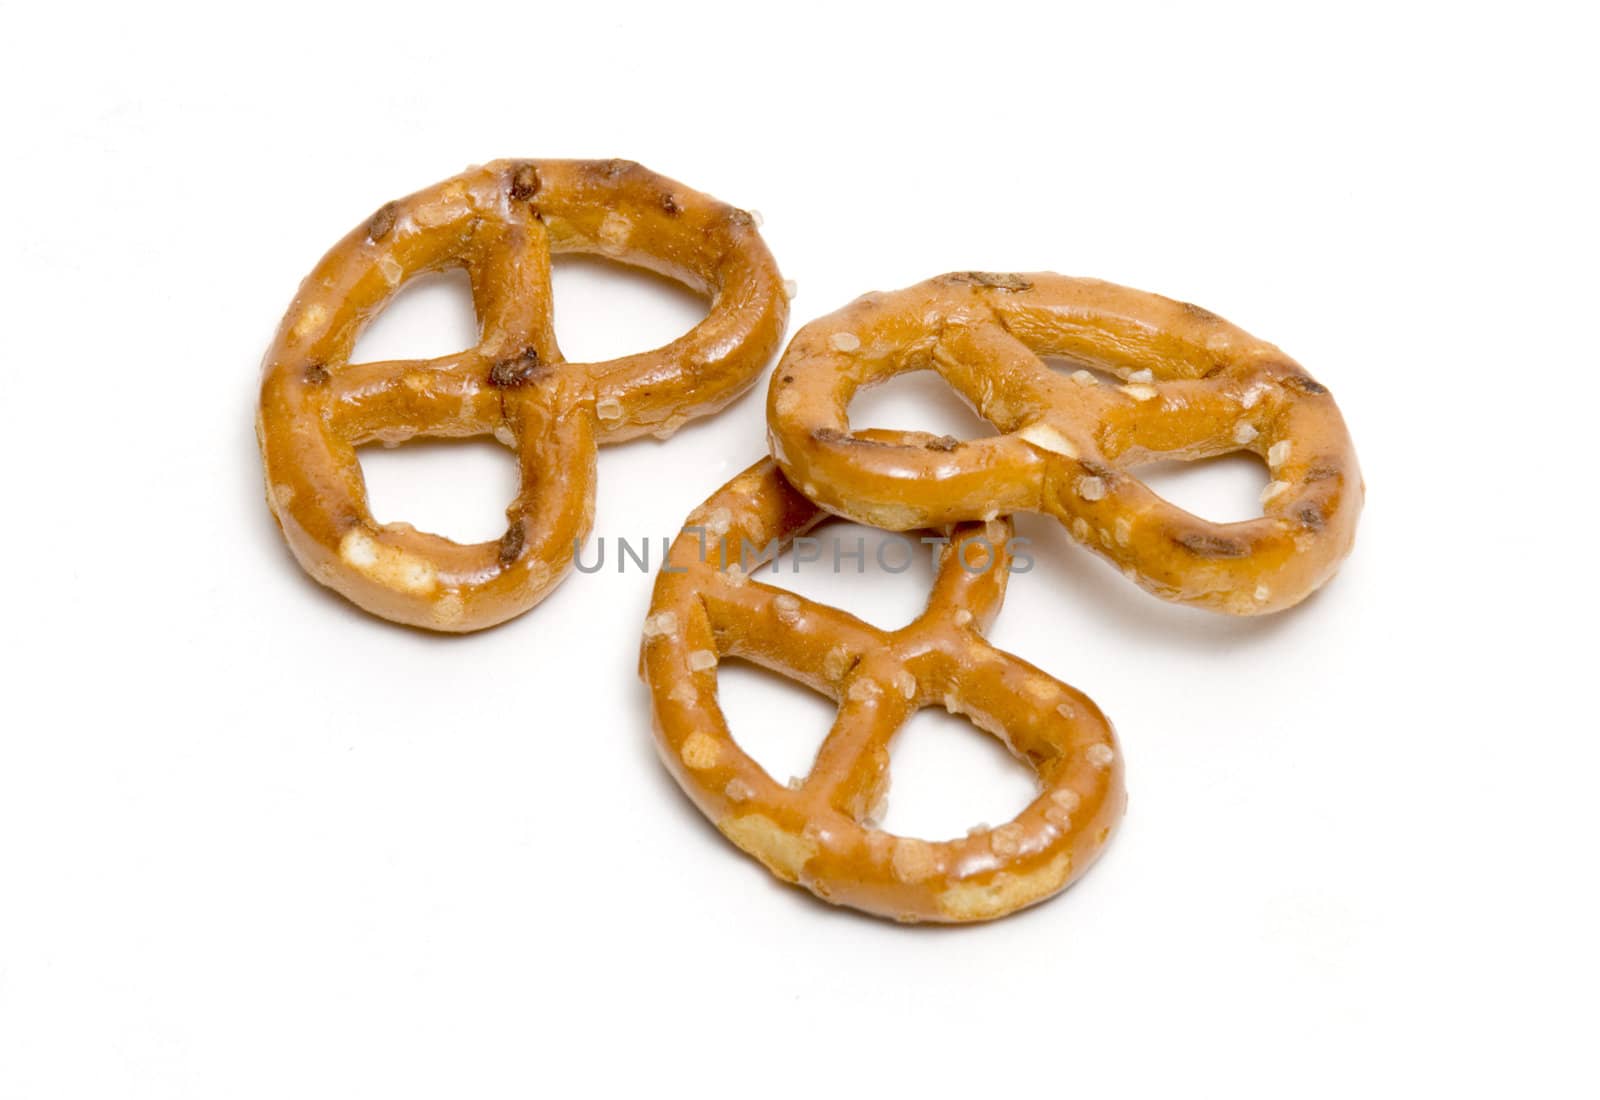 Three pretzels on white background